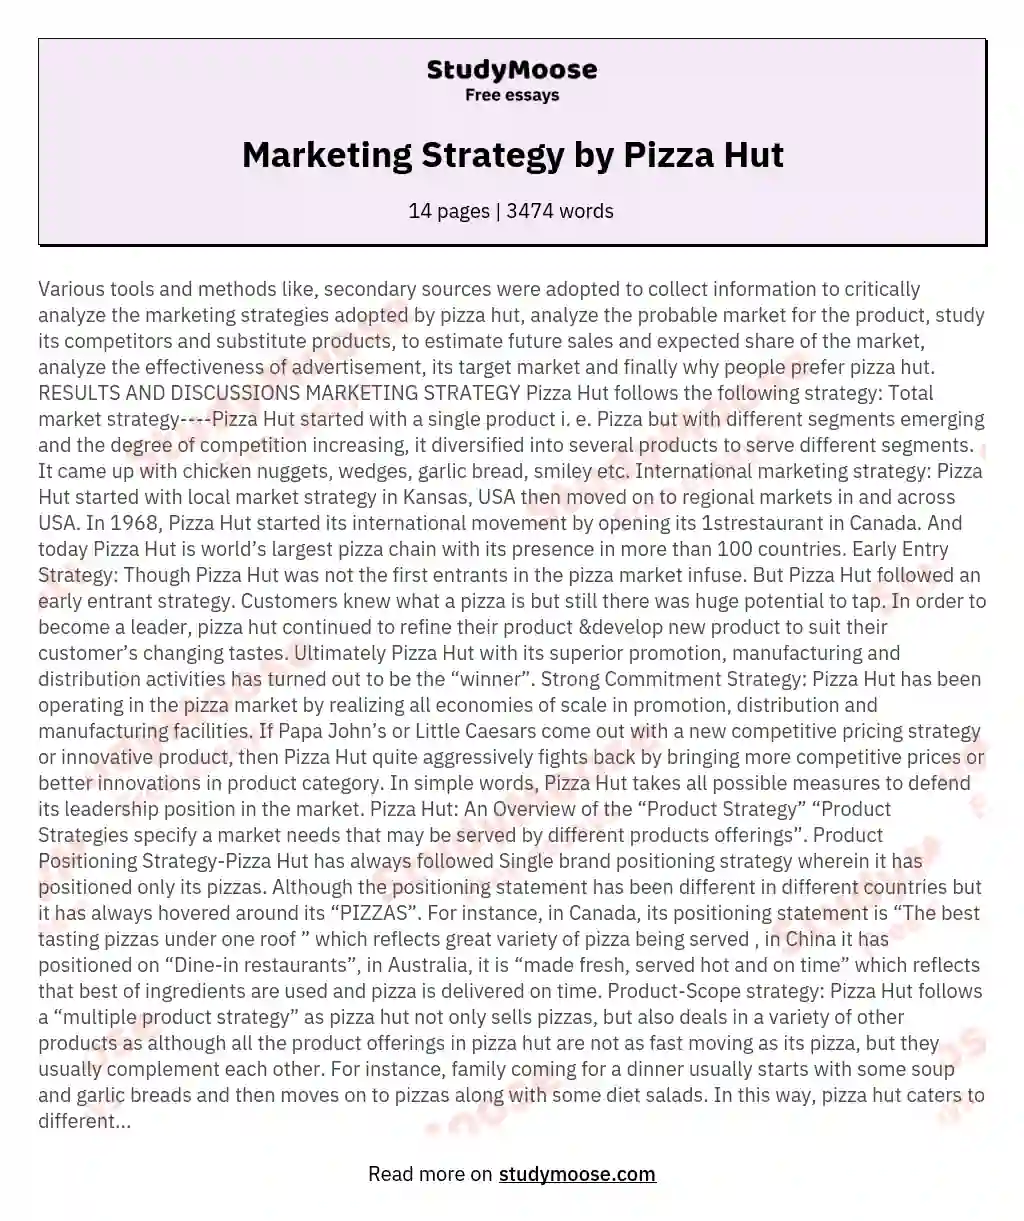 Marketing Strategy by Pizza Hut